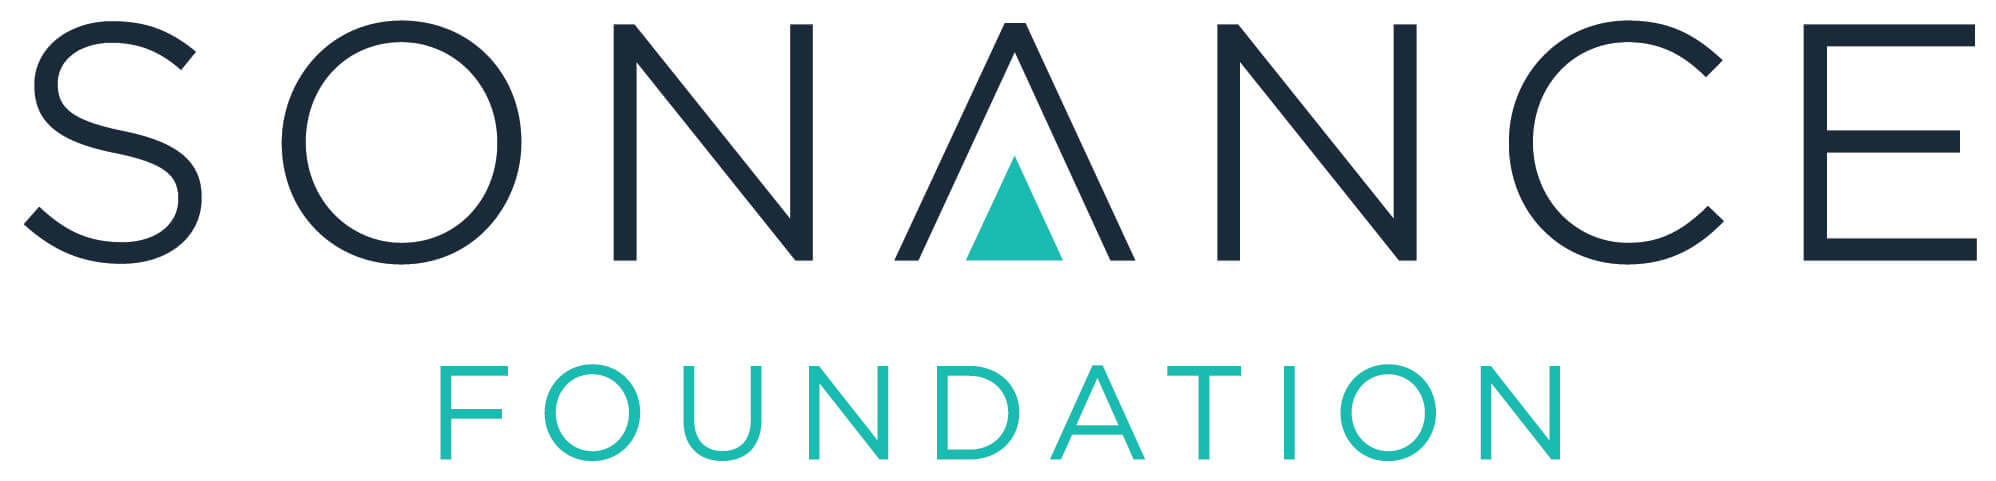 Sonance Foundation